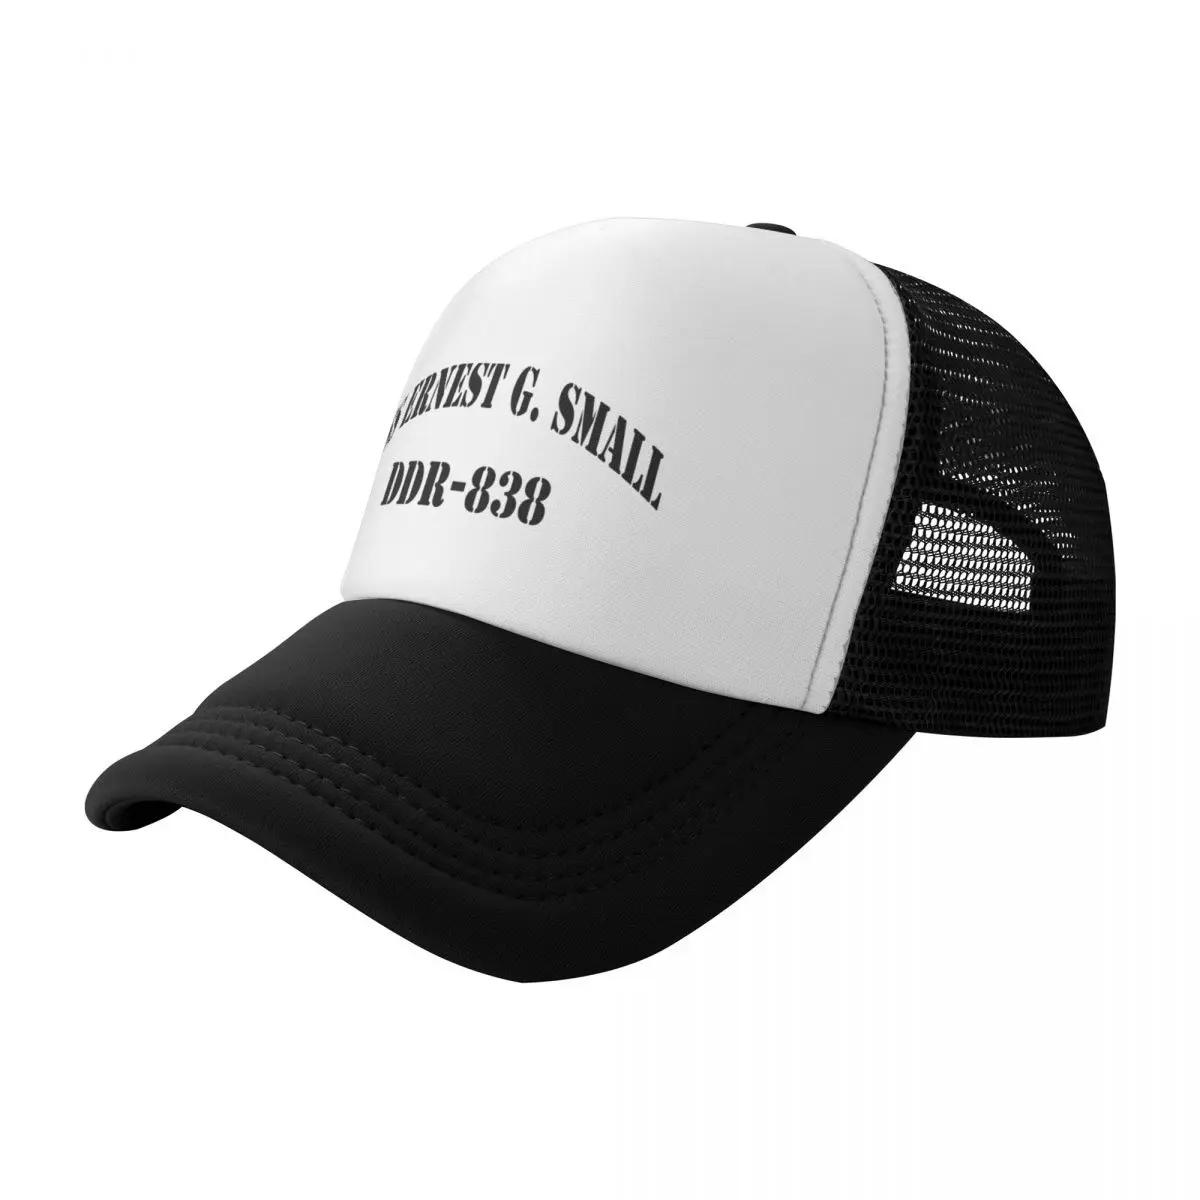 

USS ERNEST G. SMALL (DDR-838) SHIP'S STORE Baseball Cap Horse Hat funny hat Hat Man Luxury Mens Caps Women's